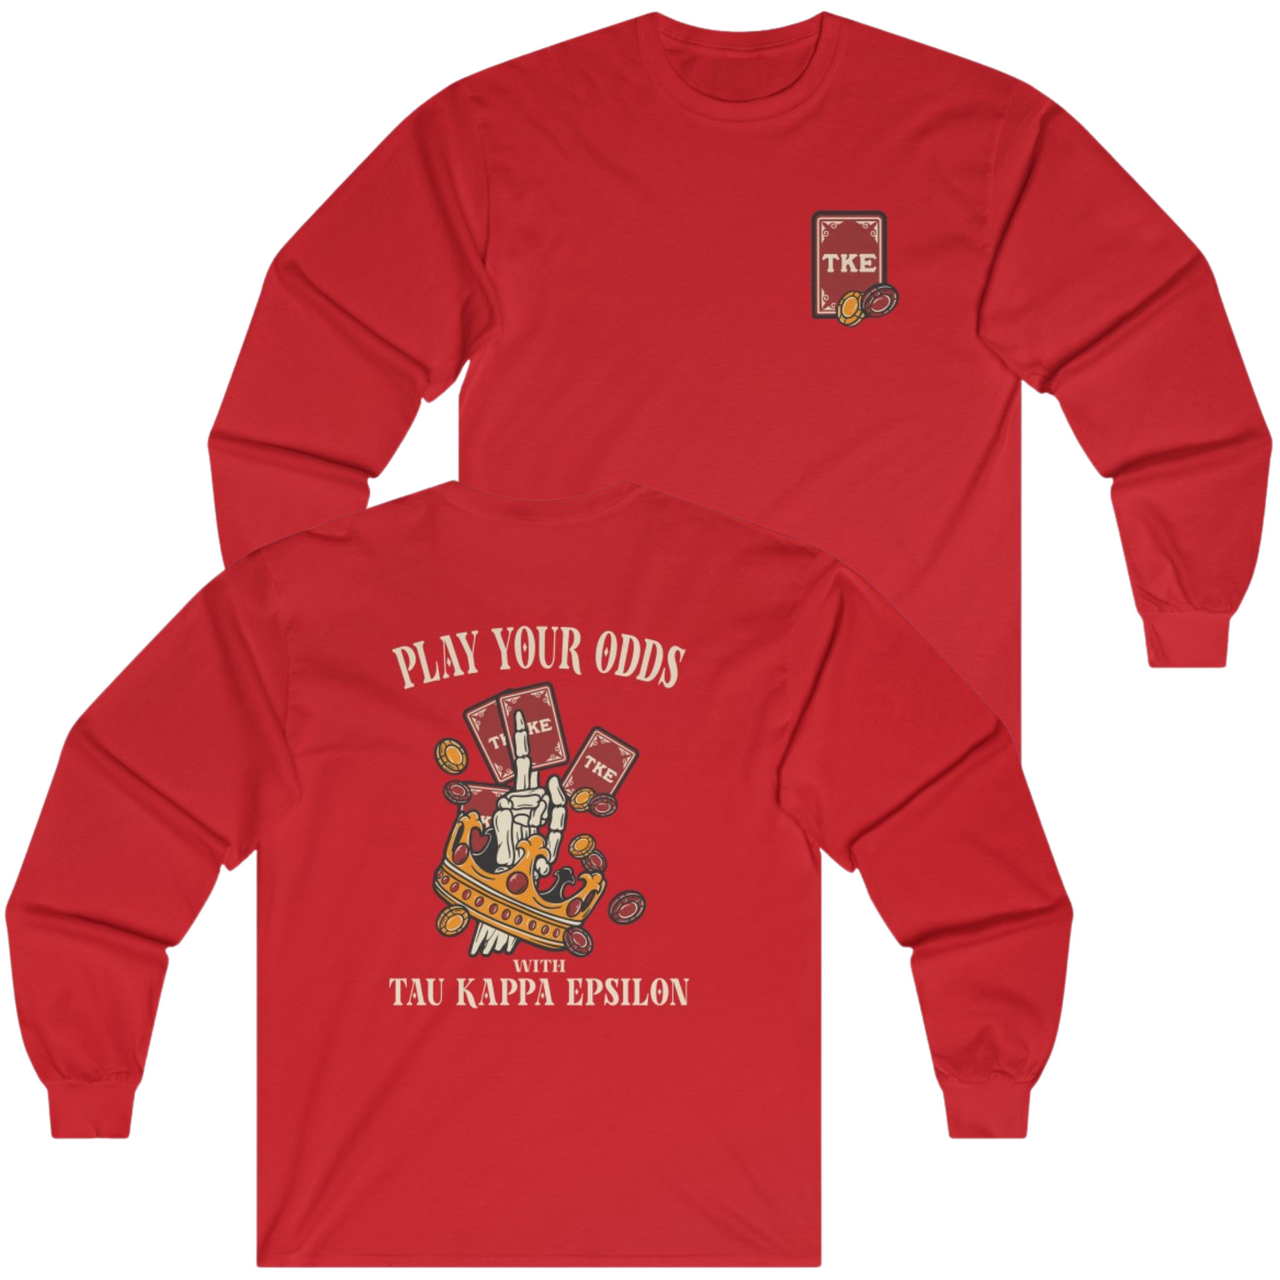 Red Tau Kappa Epsilon Graphic Long Sleeve T-Shirt | Play Your Odds | Tau Kappa Epsilon Fraternity 